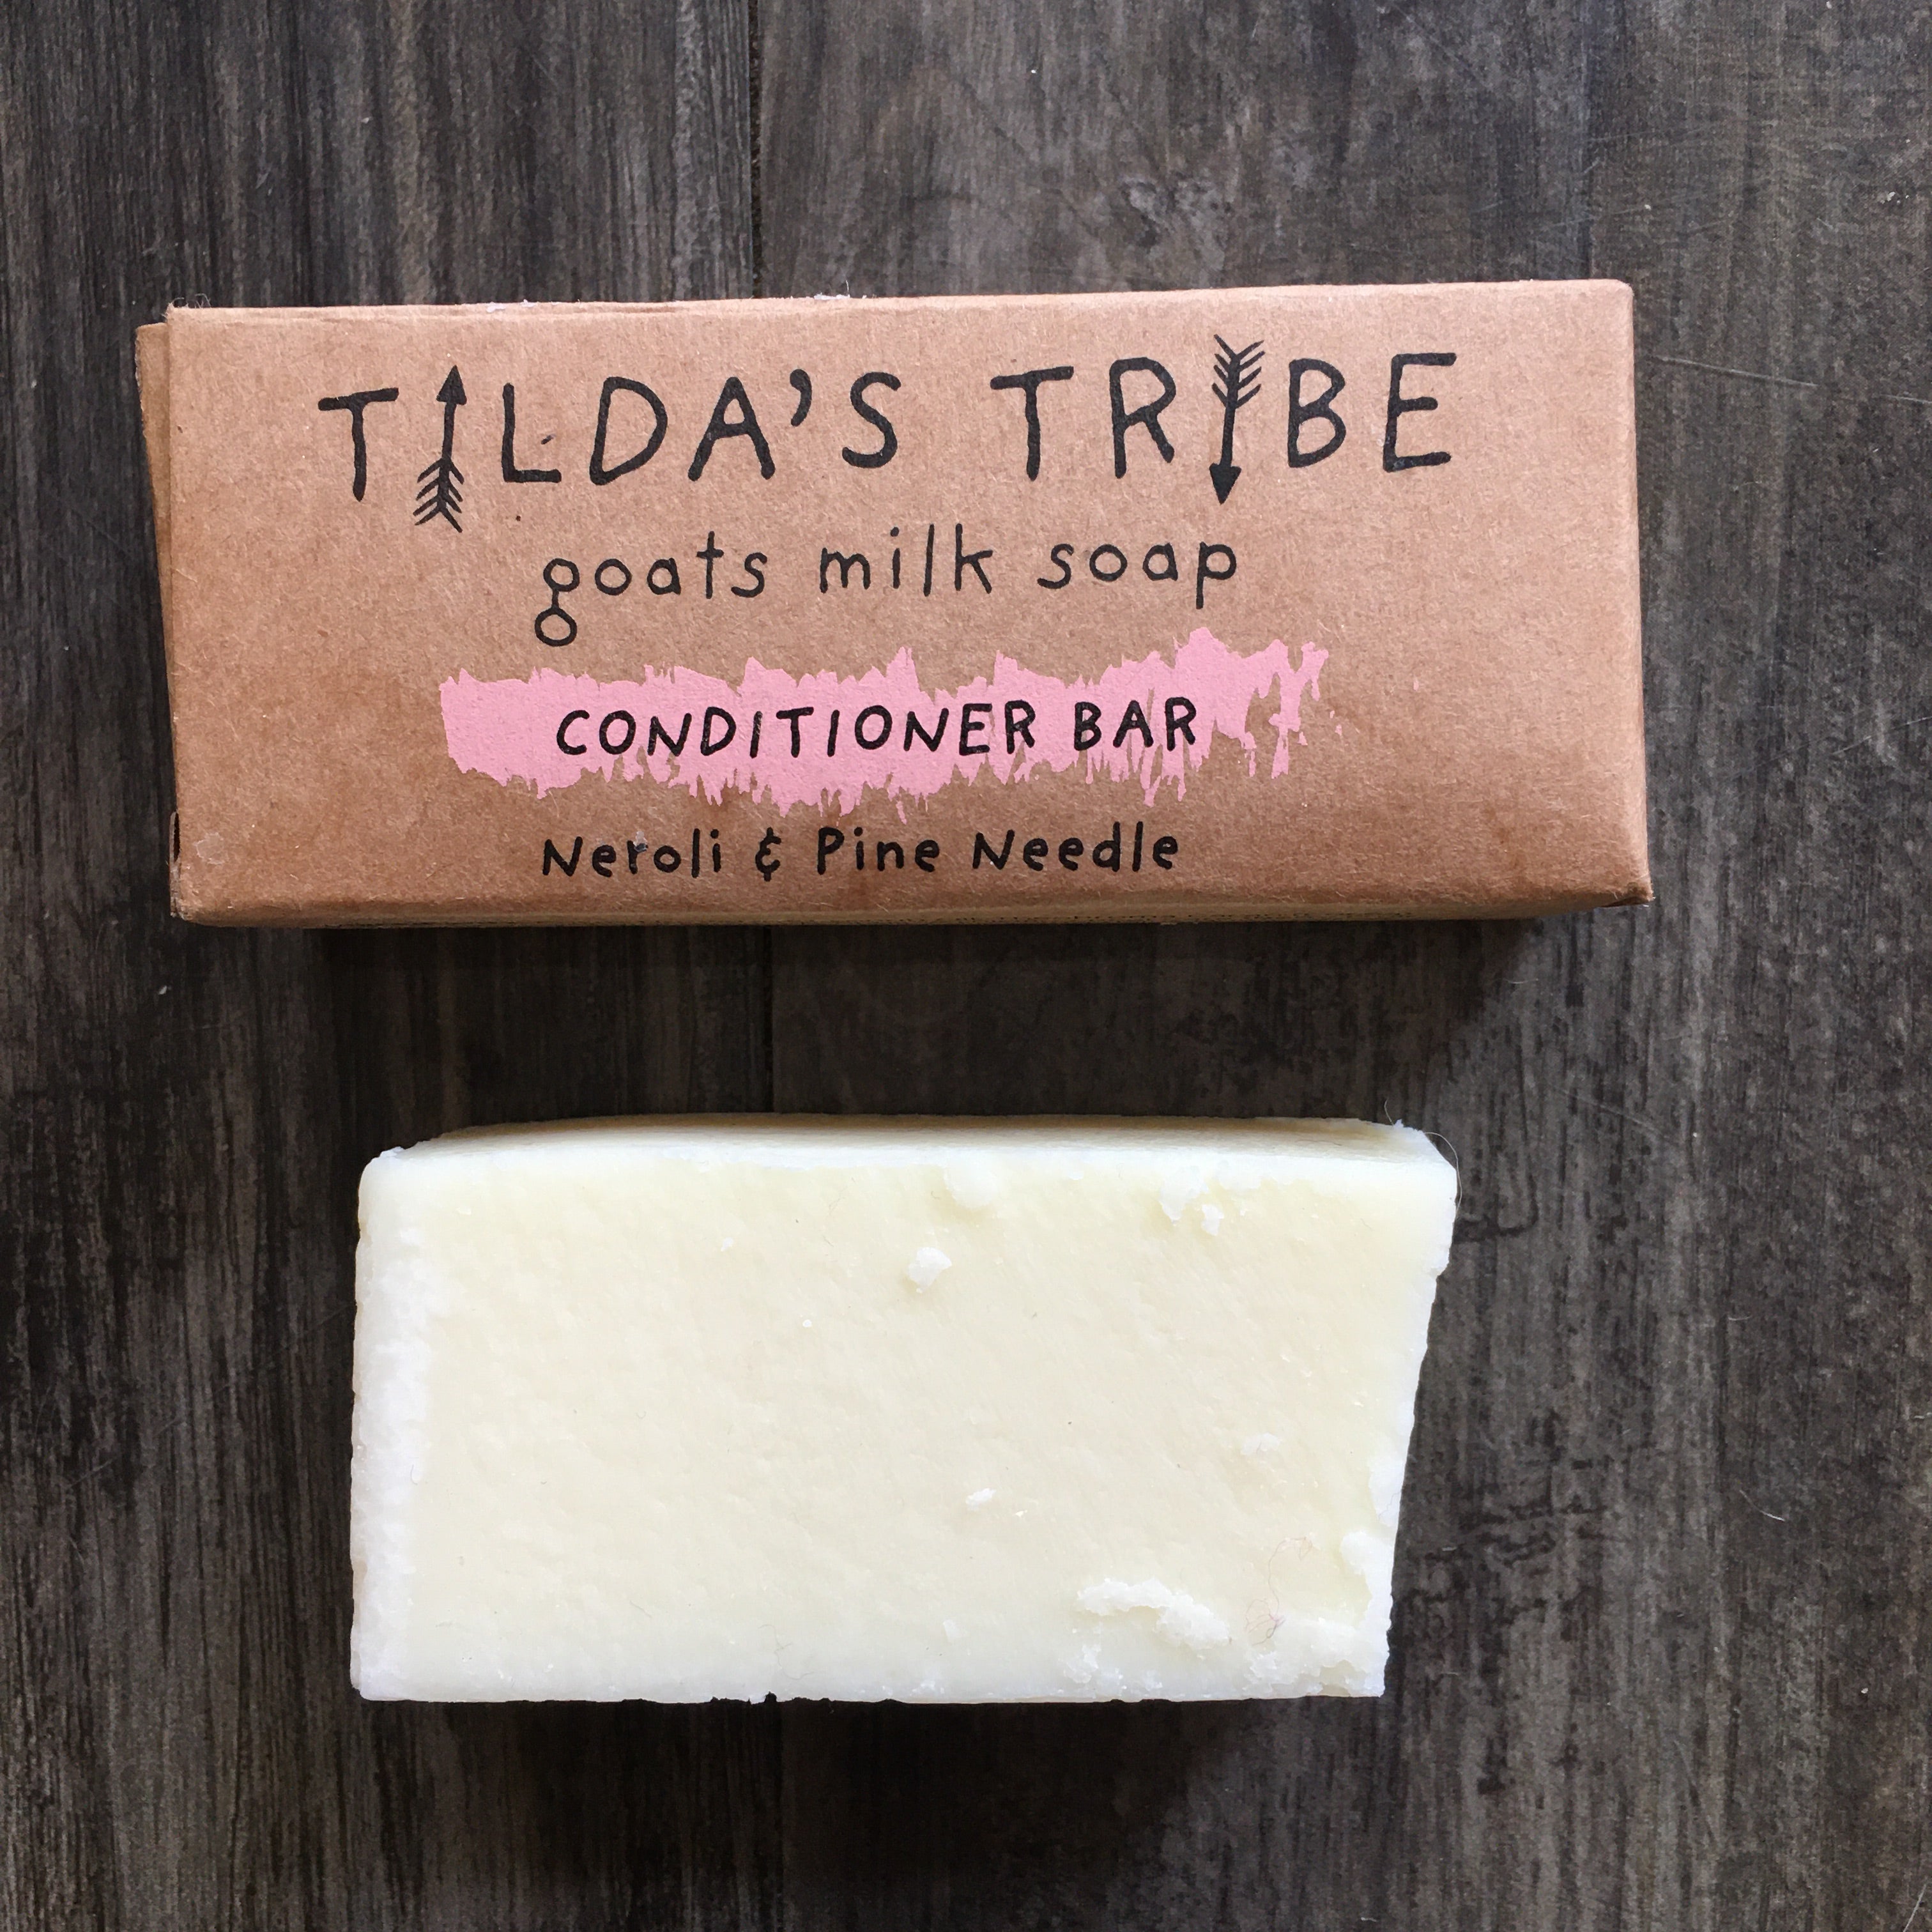 TILDA'S TRIBE GOATS MILK SOAP